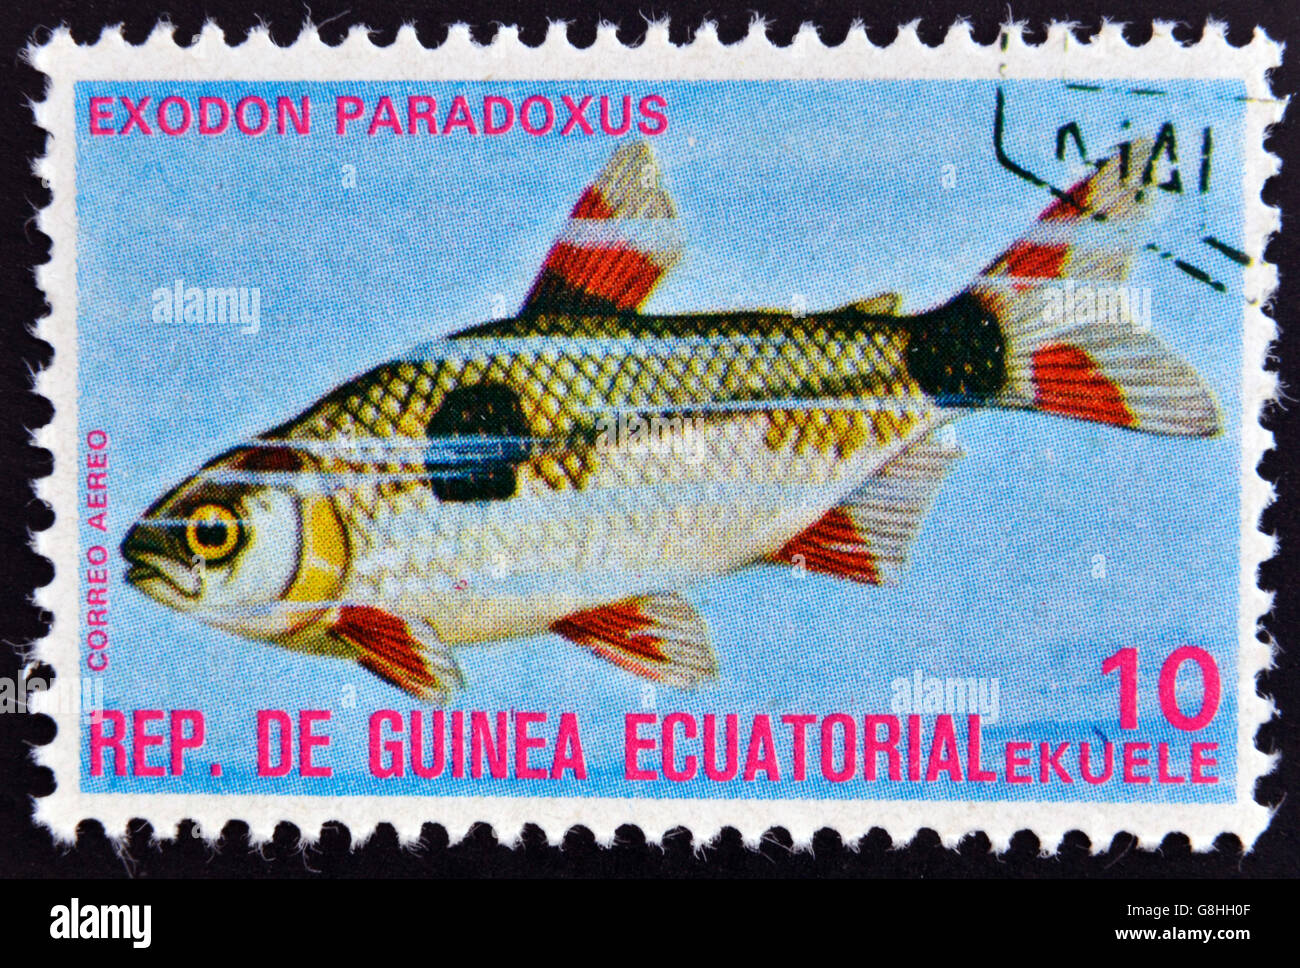 EQUATORIAL GUINEA - CIRCA 1974: A stamp printed in Guinea Ecuatorial dedicated to exotic fish shows exodon paradoxus, circa 1974 Stock Photo